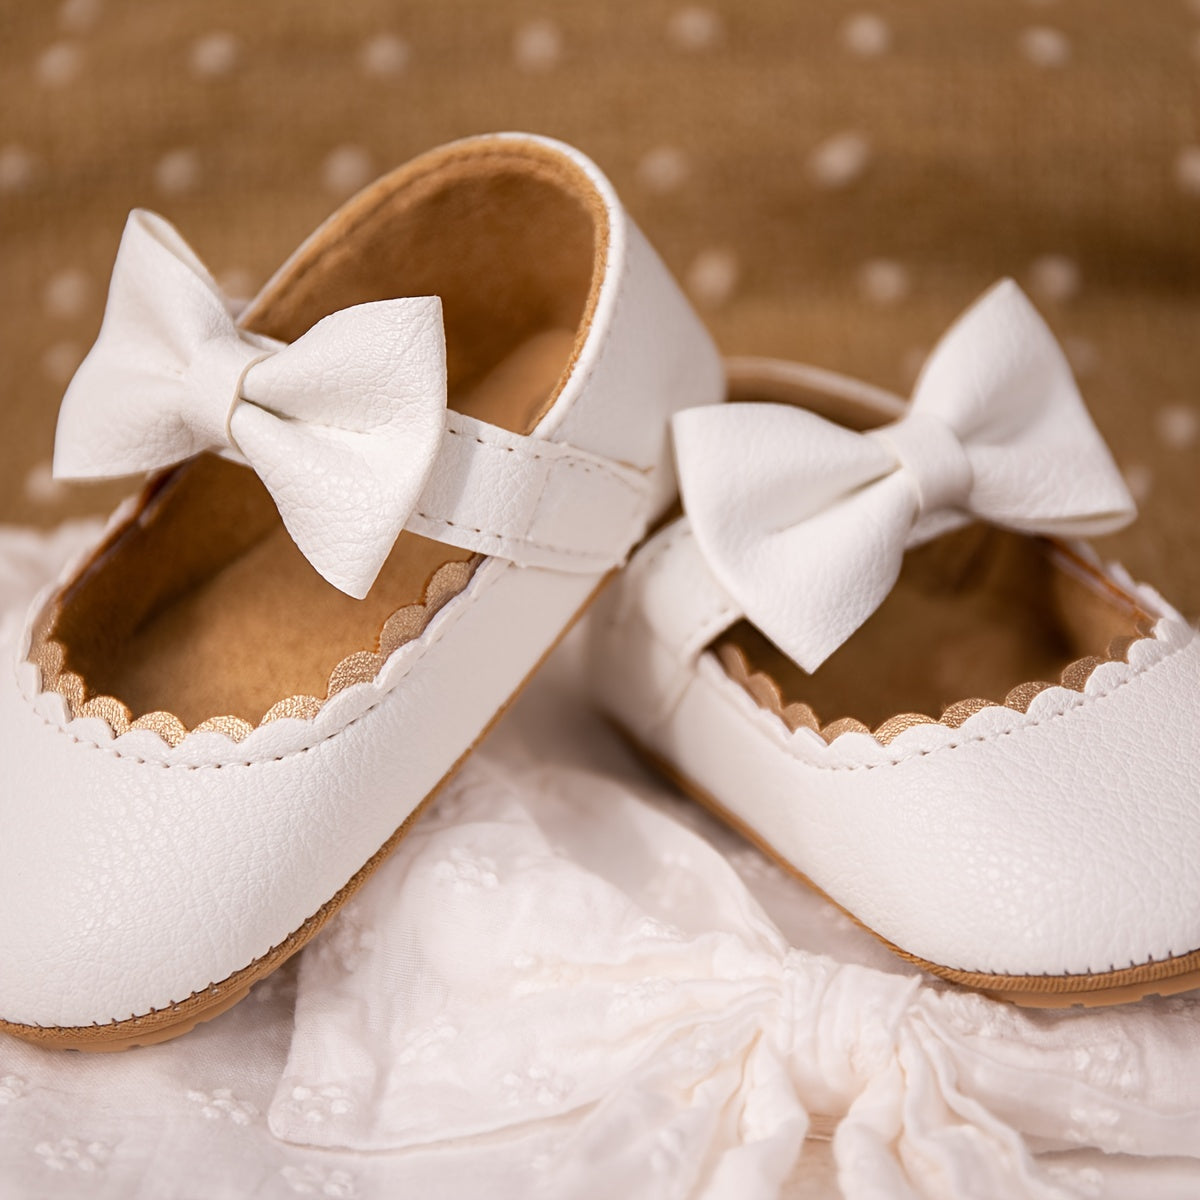 Infant Baby Girls Soft Sole Anti Slip Princess Dress Shoes